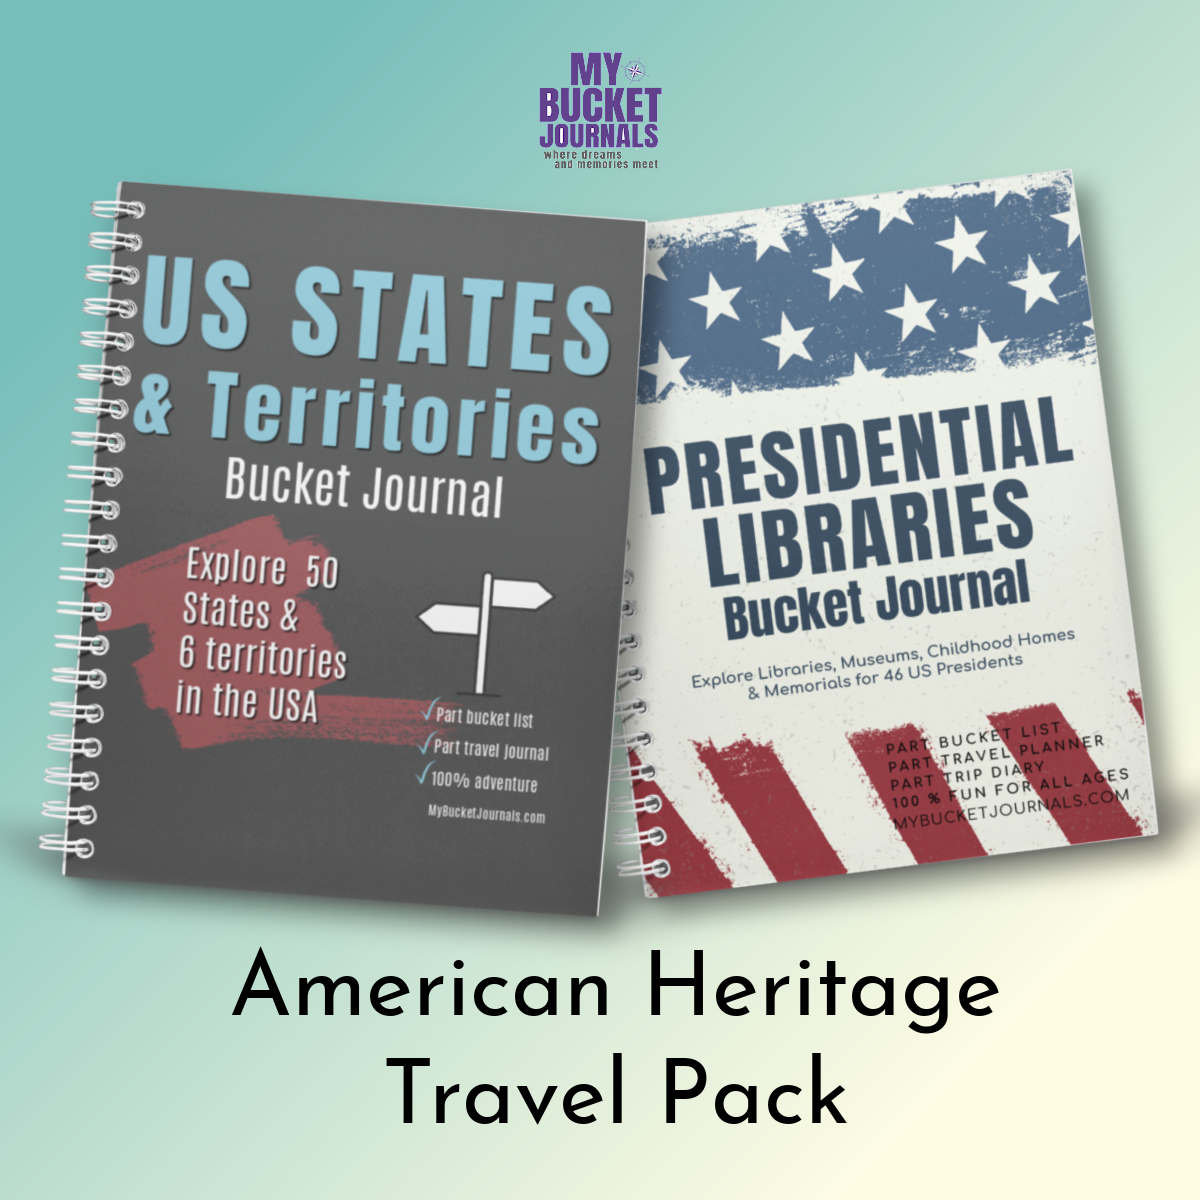 American Heritage Travel Pack